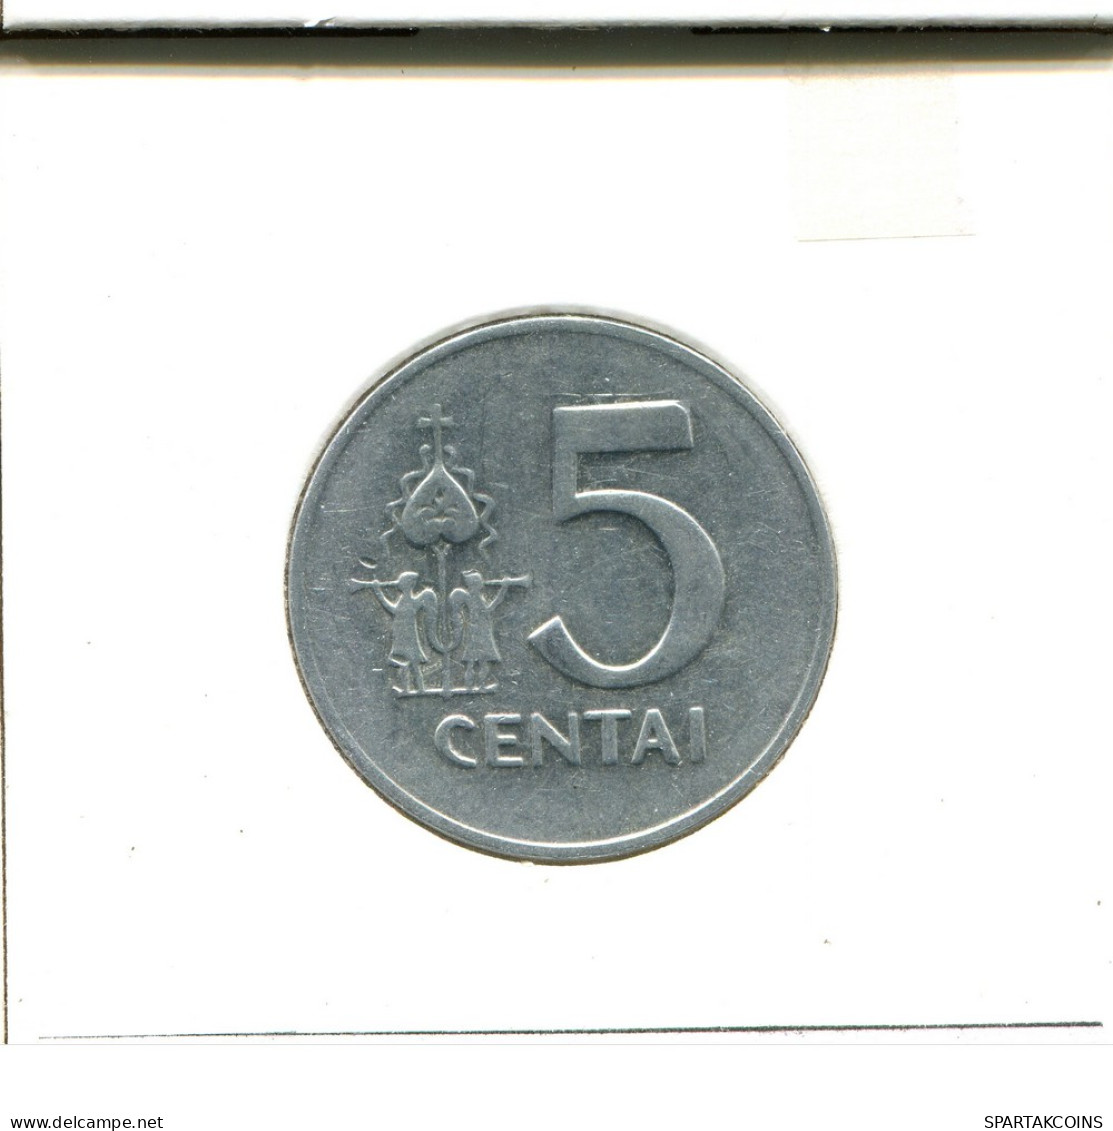 5 CENTAI 1991 LITHUANIA Coin #AS695.U - Litauen